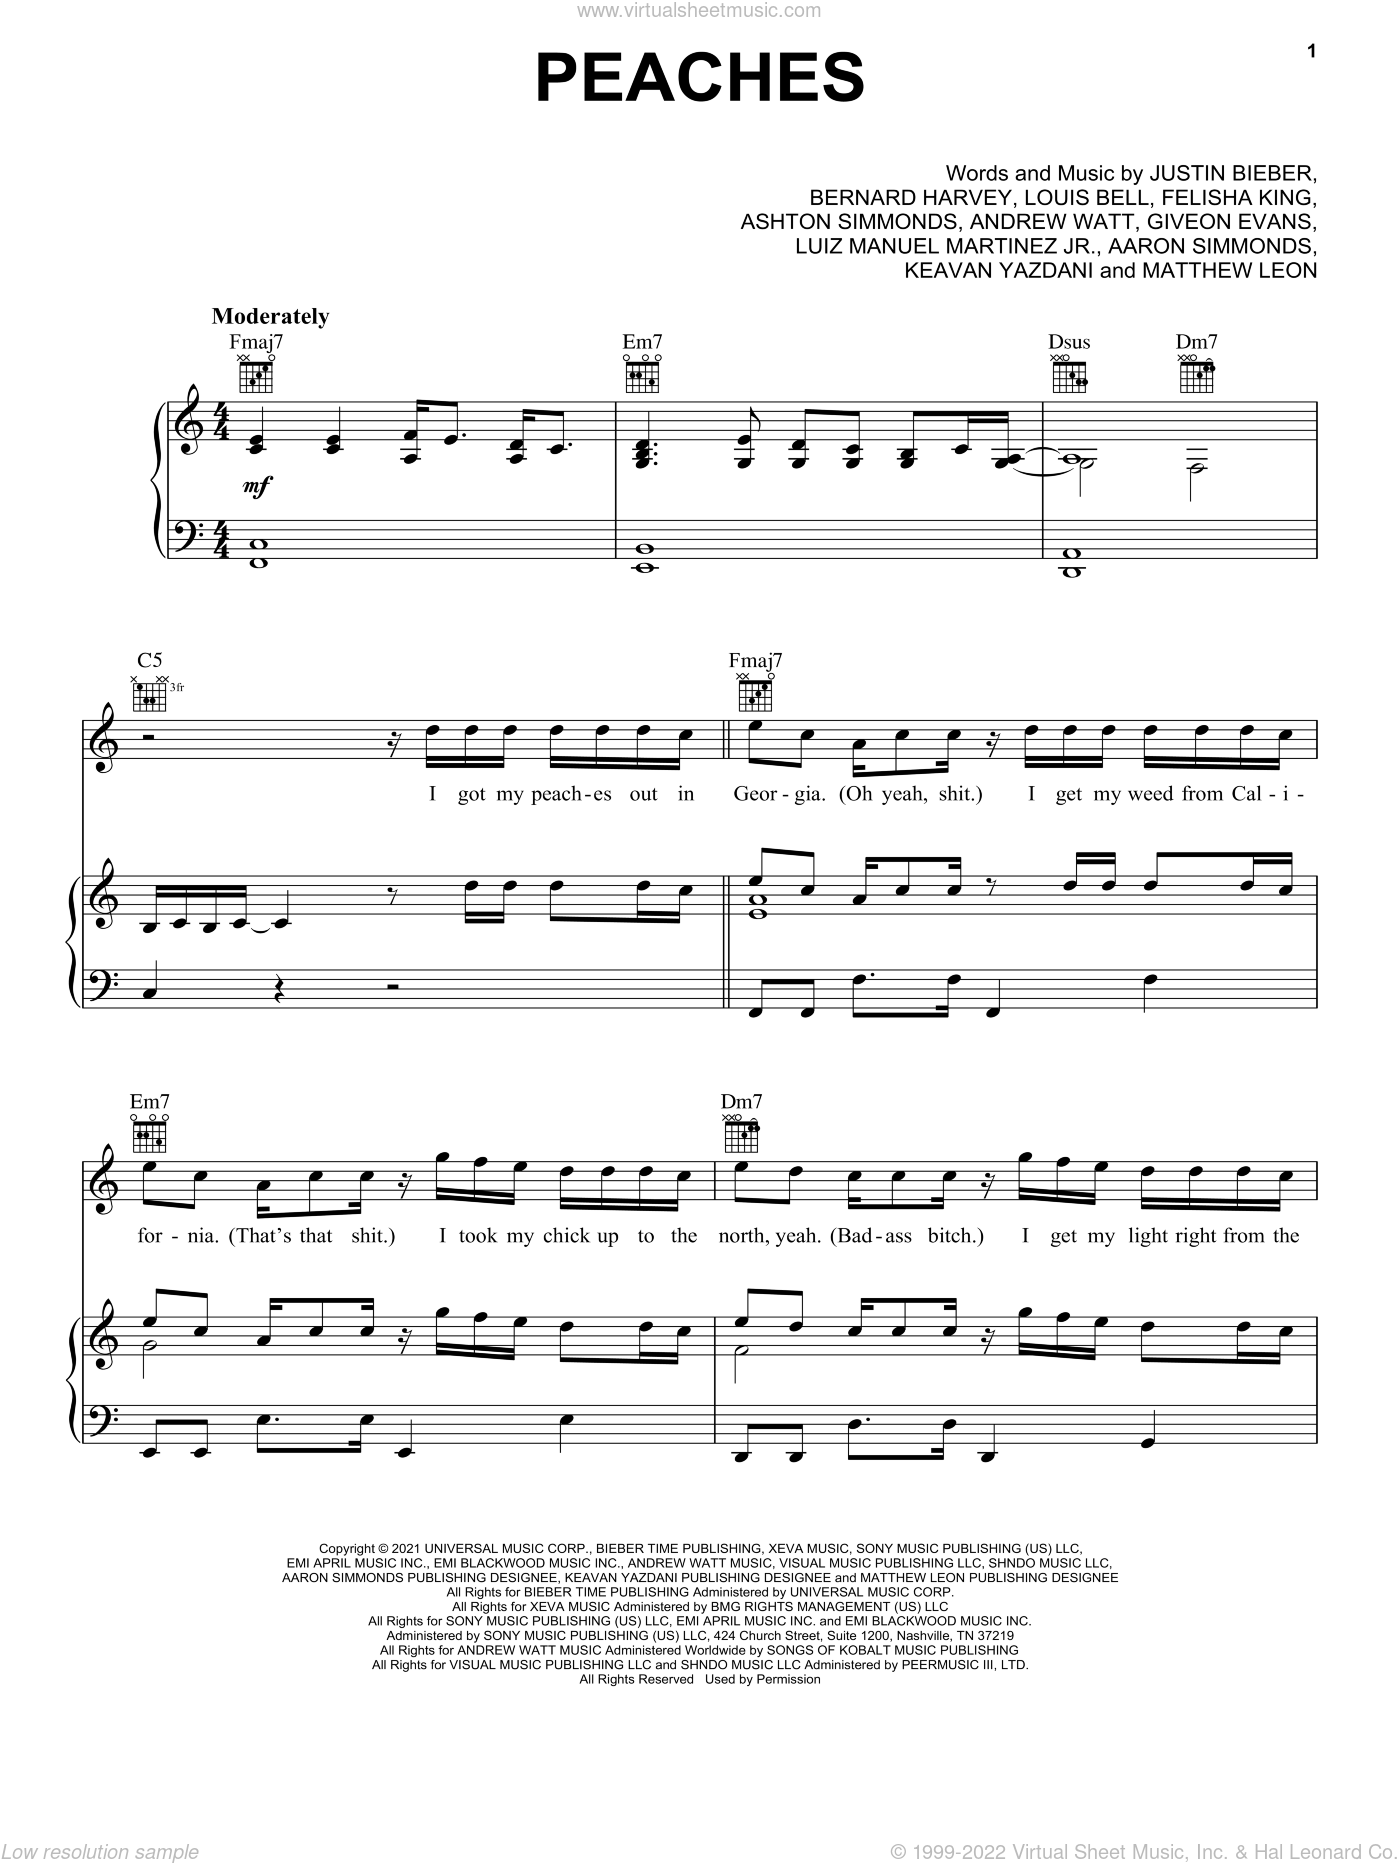 Peaches - Easy Piano - Digital Sheet Music